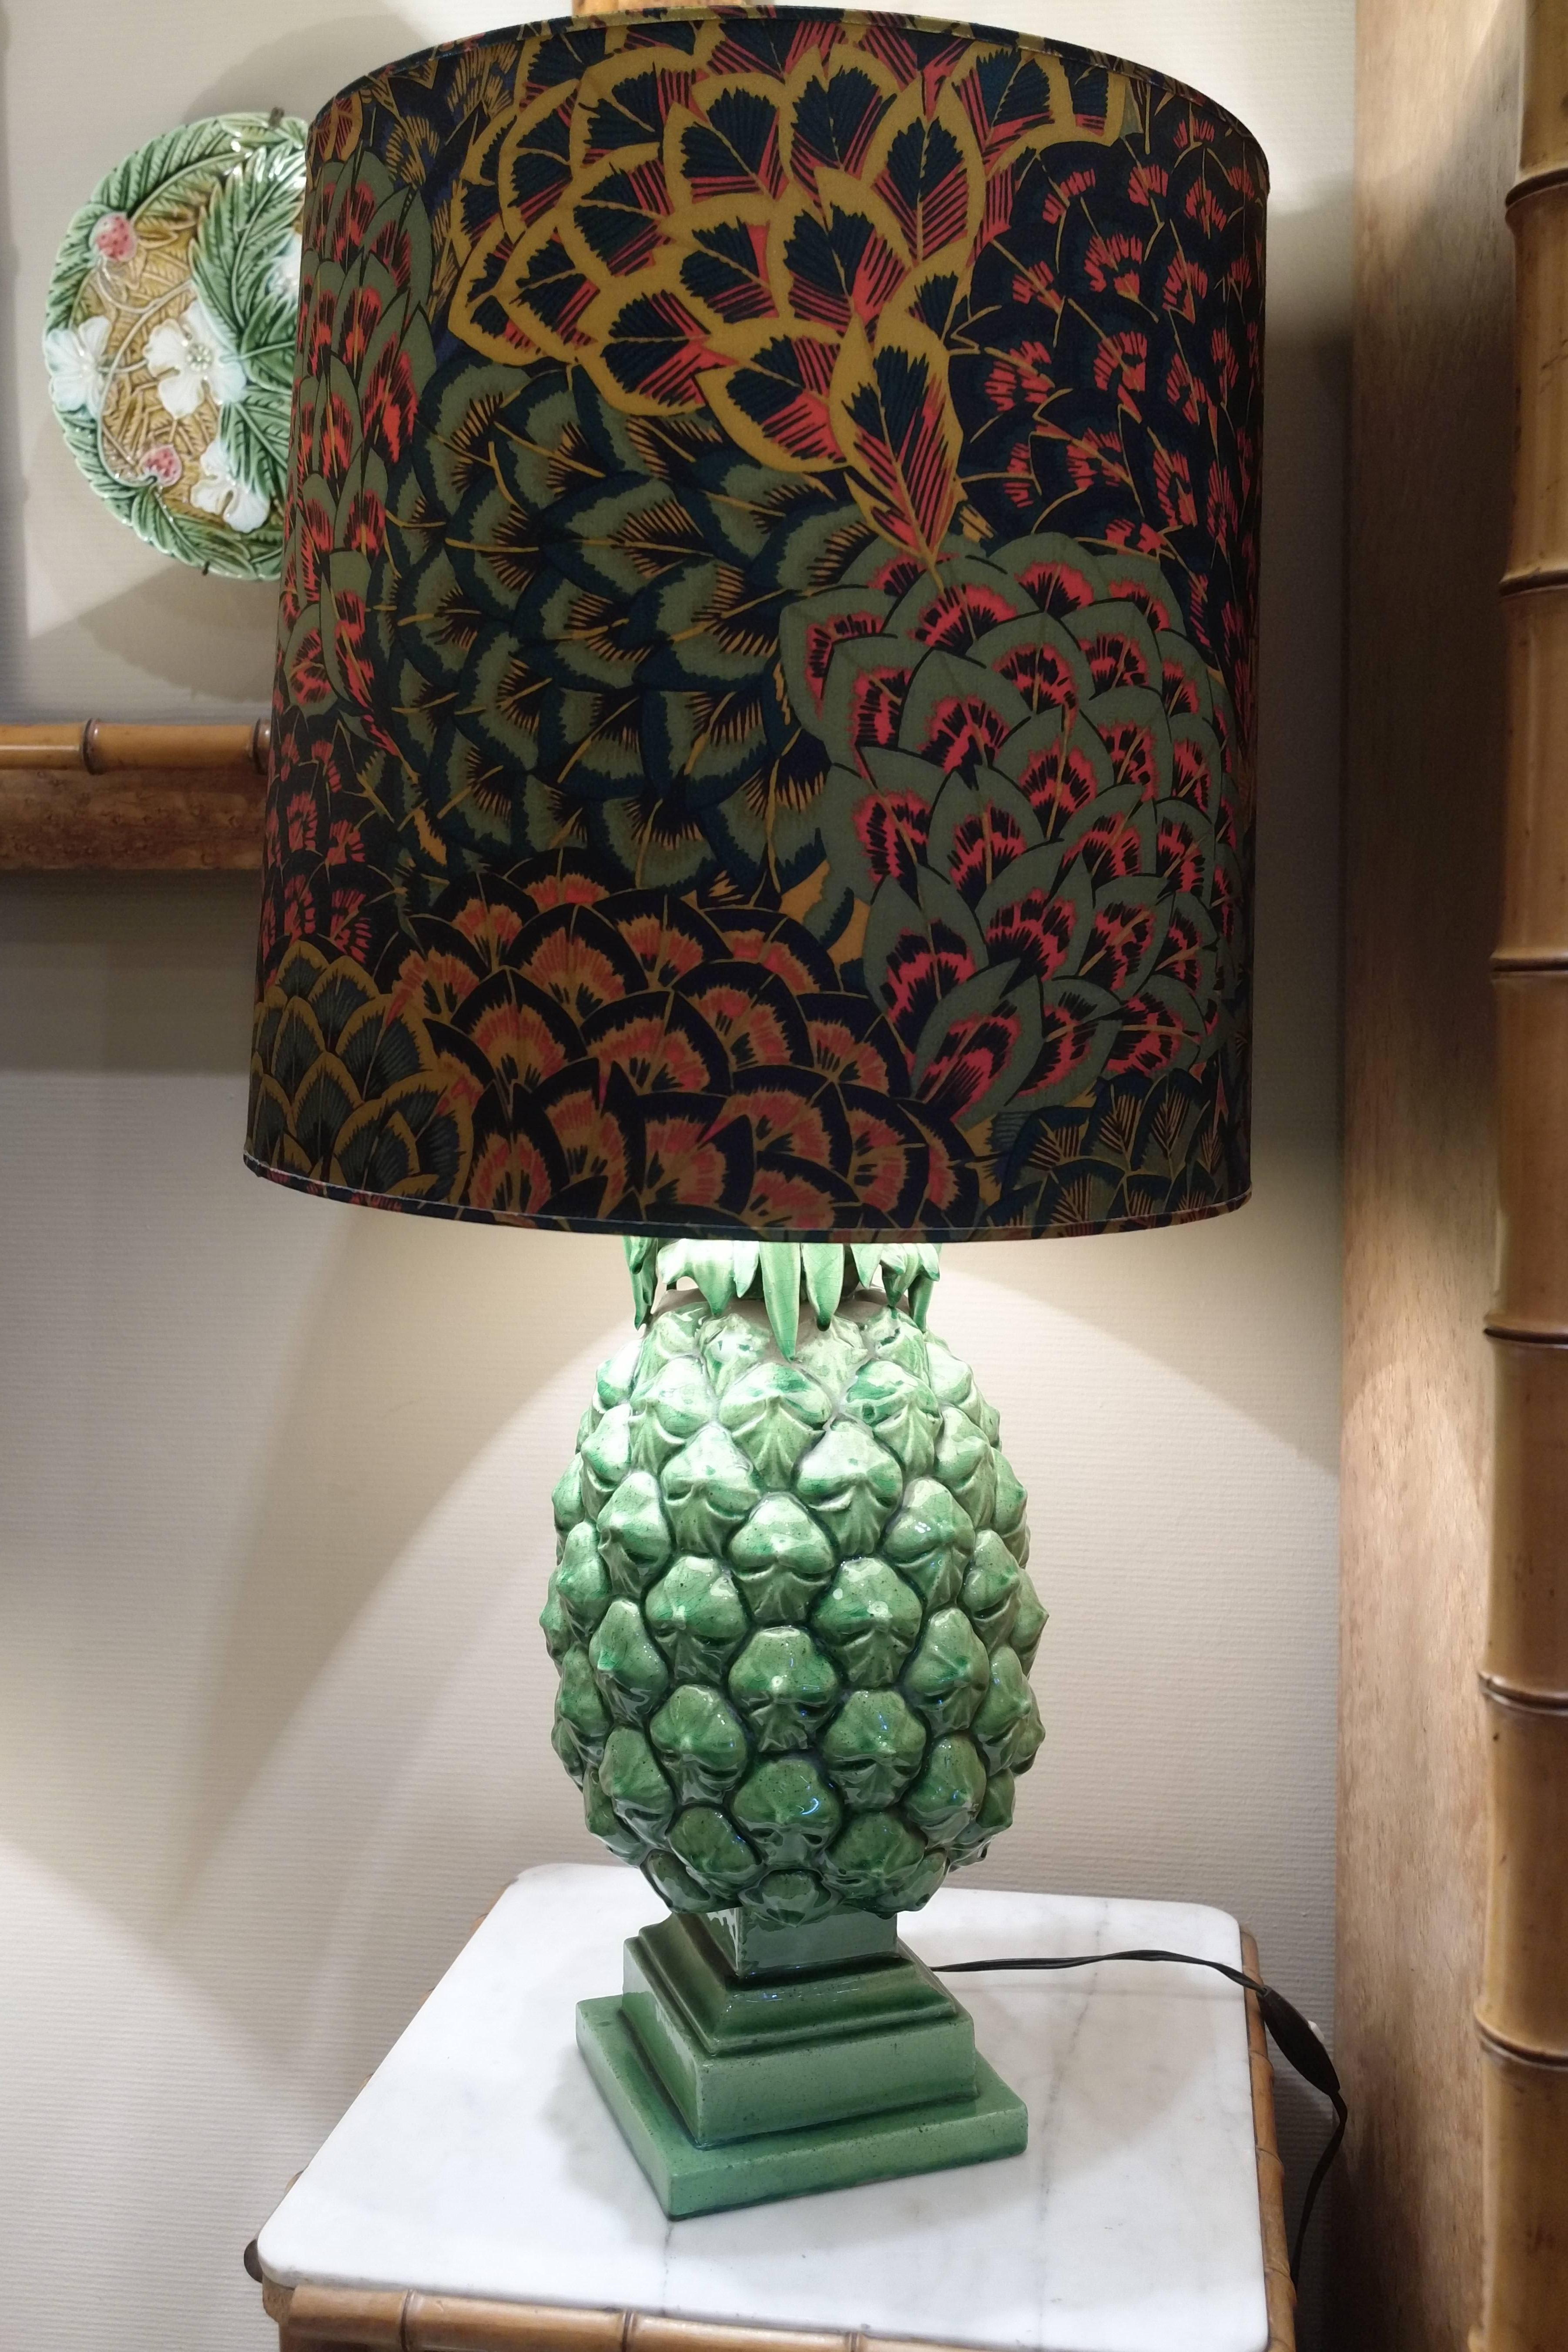 Belgian Pair of Two Green Ceramic Pineapple Table Lamps, circa 1970, 20th Century